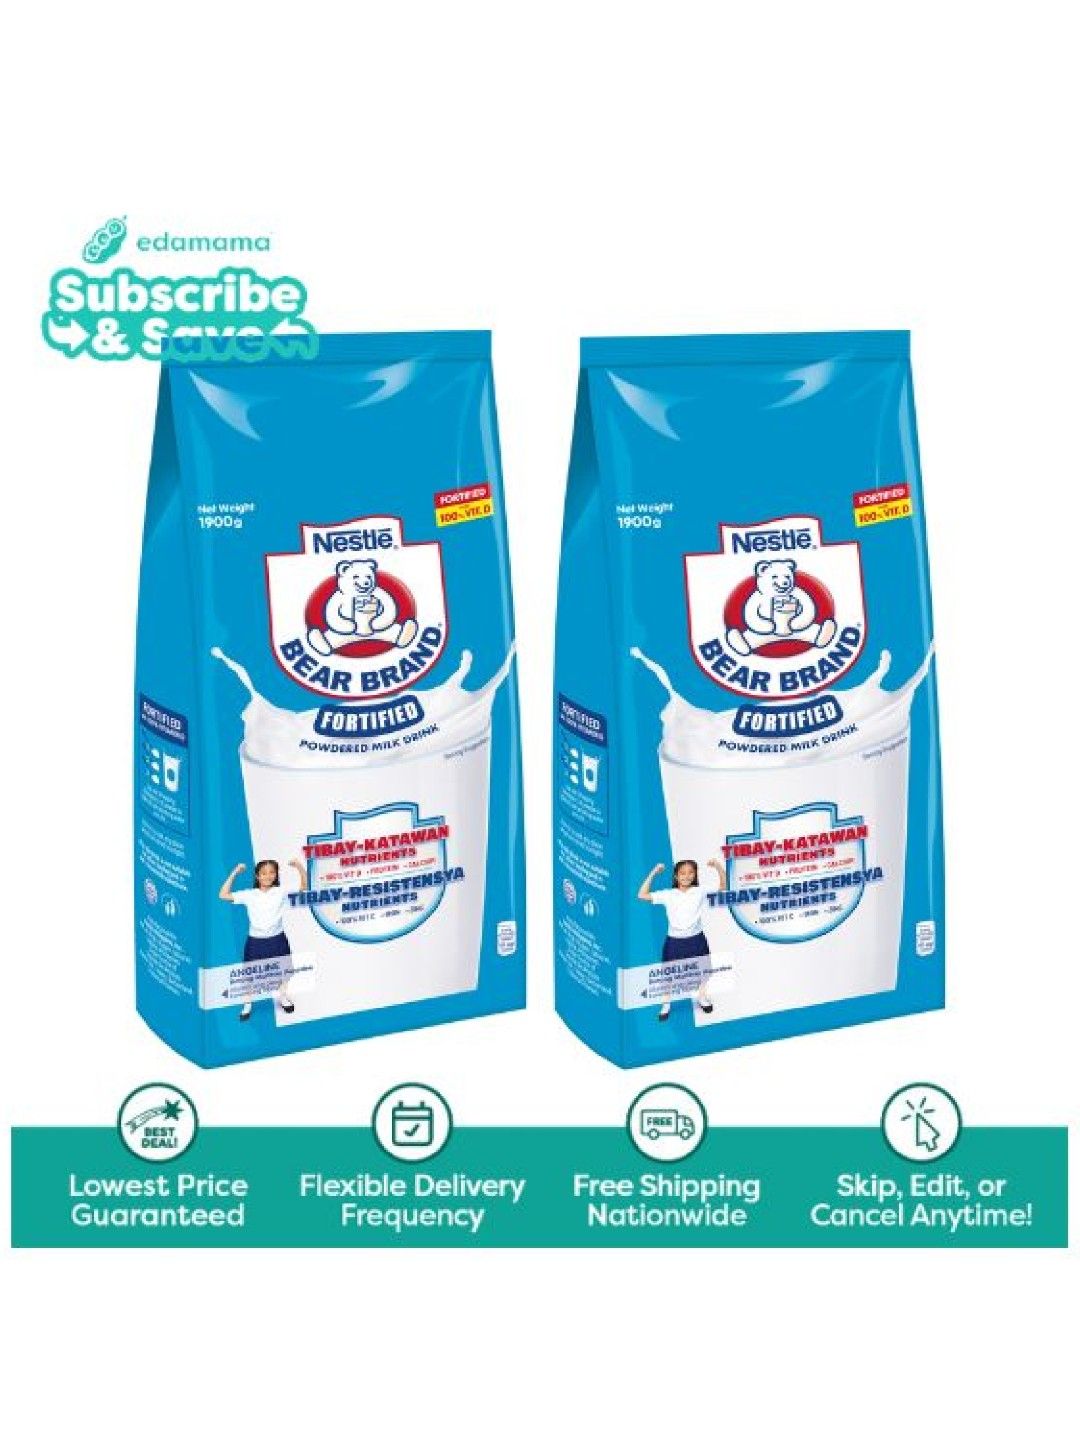 Bear Brand Fortified Powdered Milk Drink (1.9kg) Bundle of 2 - Subscription